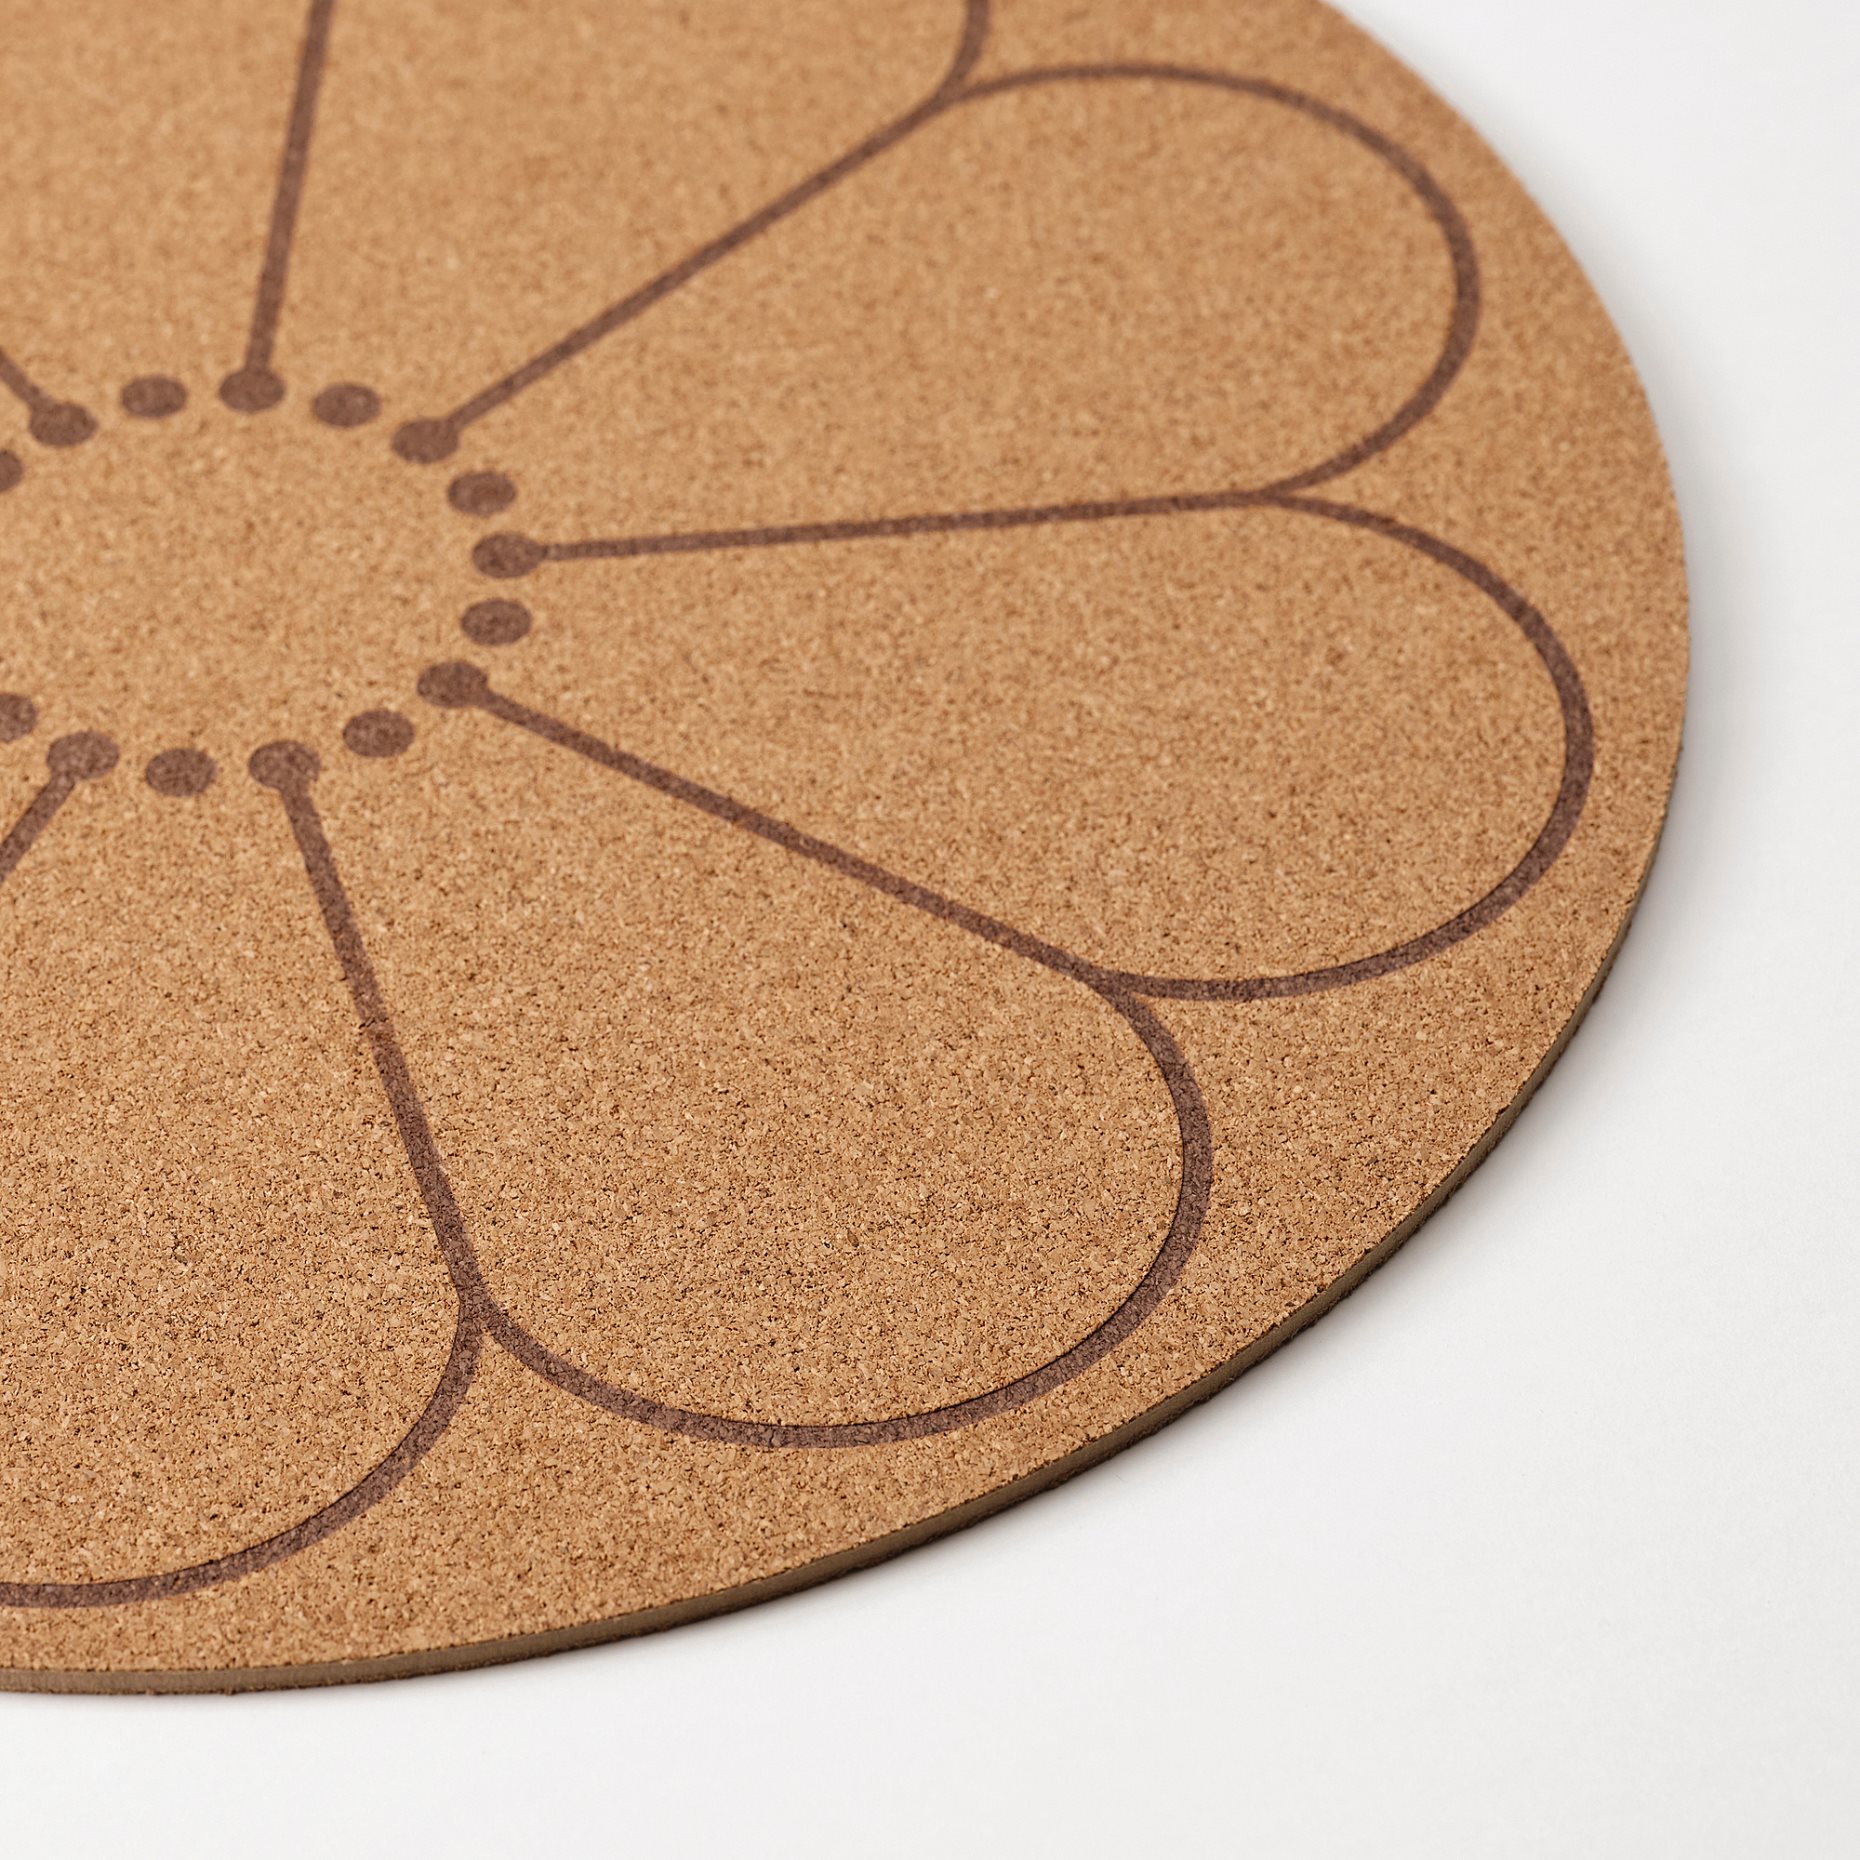 SVARTVIDE, place mat patterned flower, 35 cm, 405.508.11